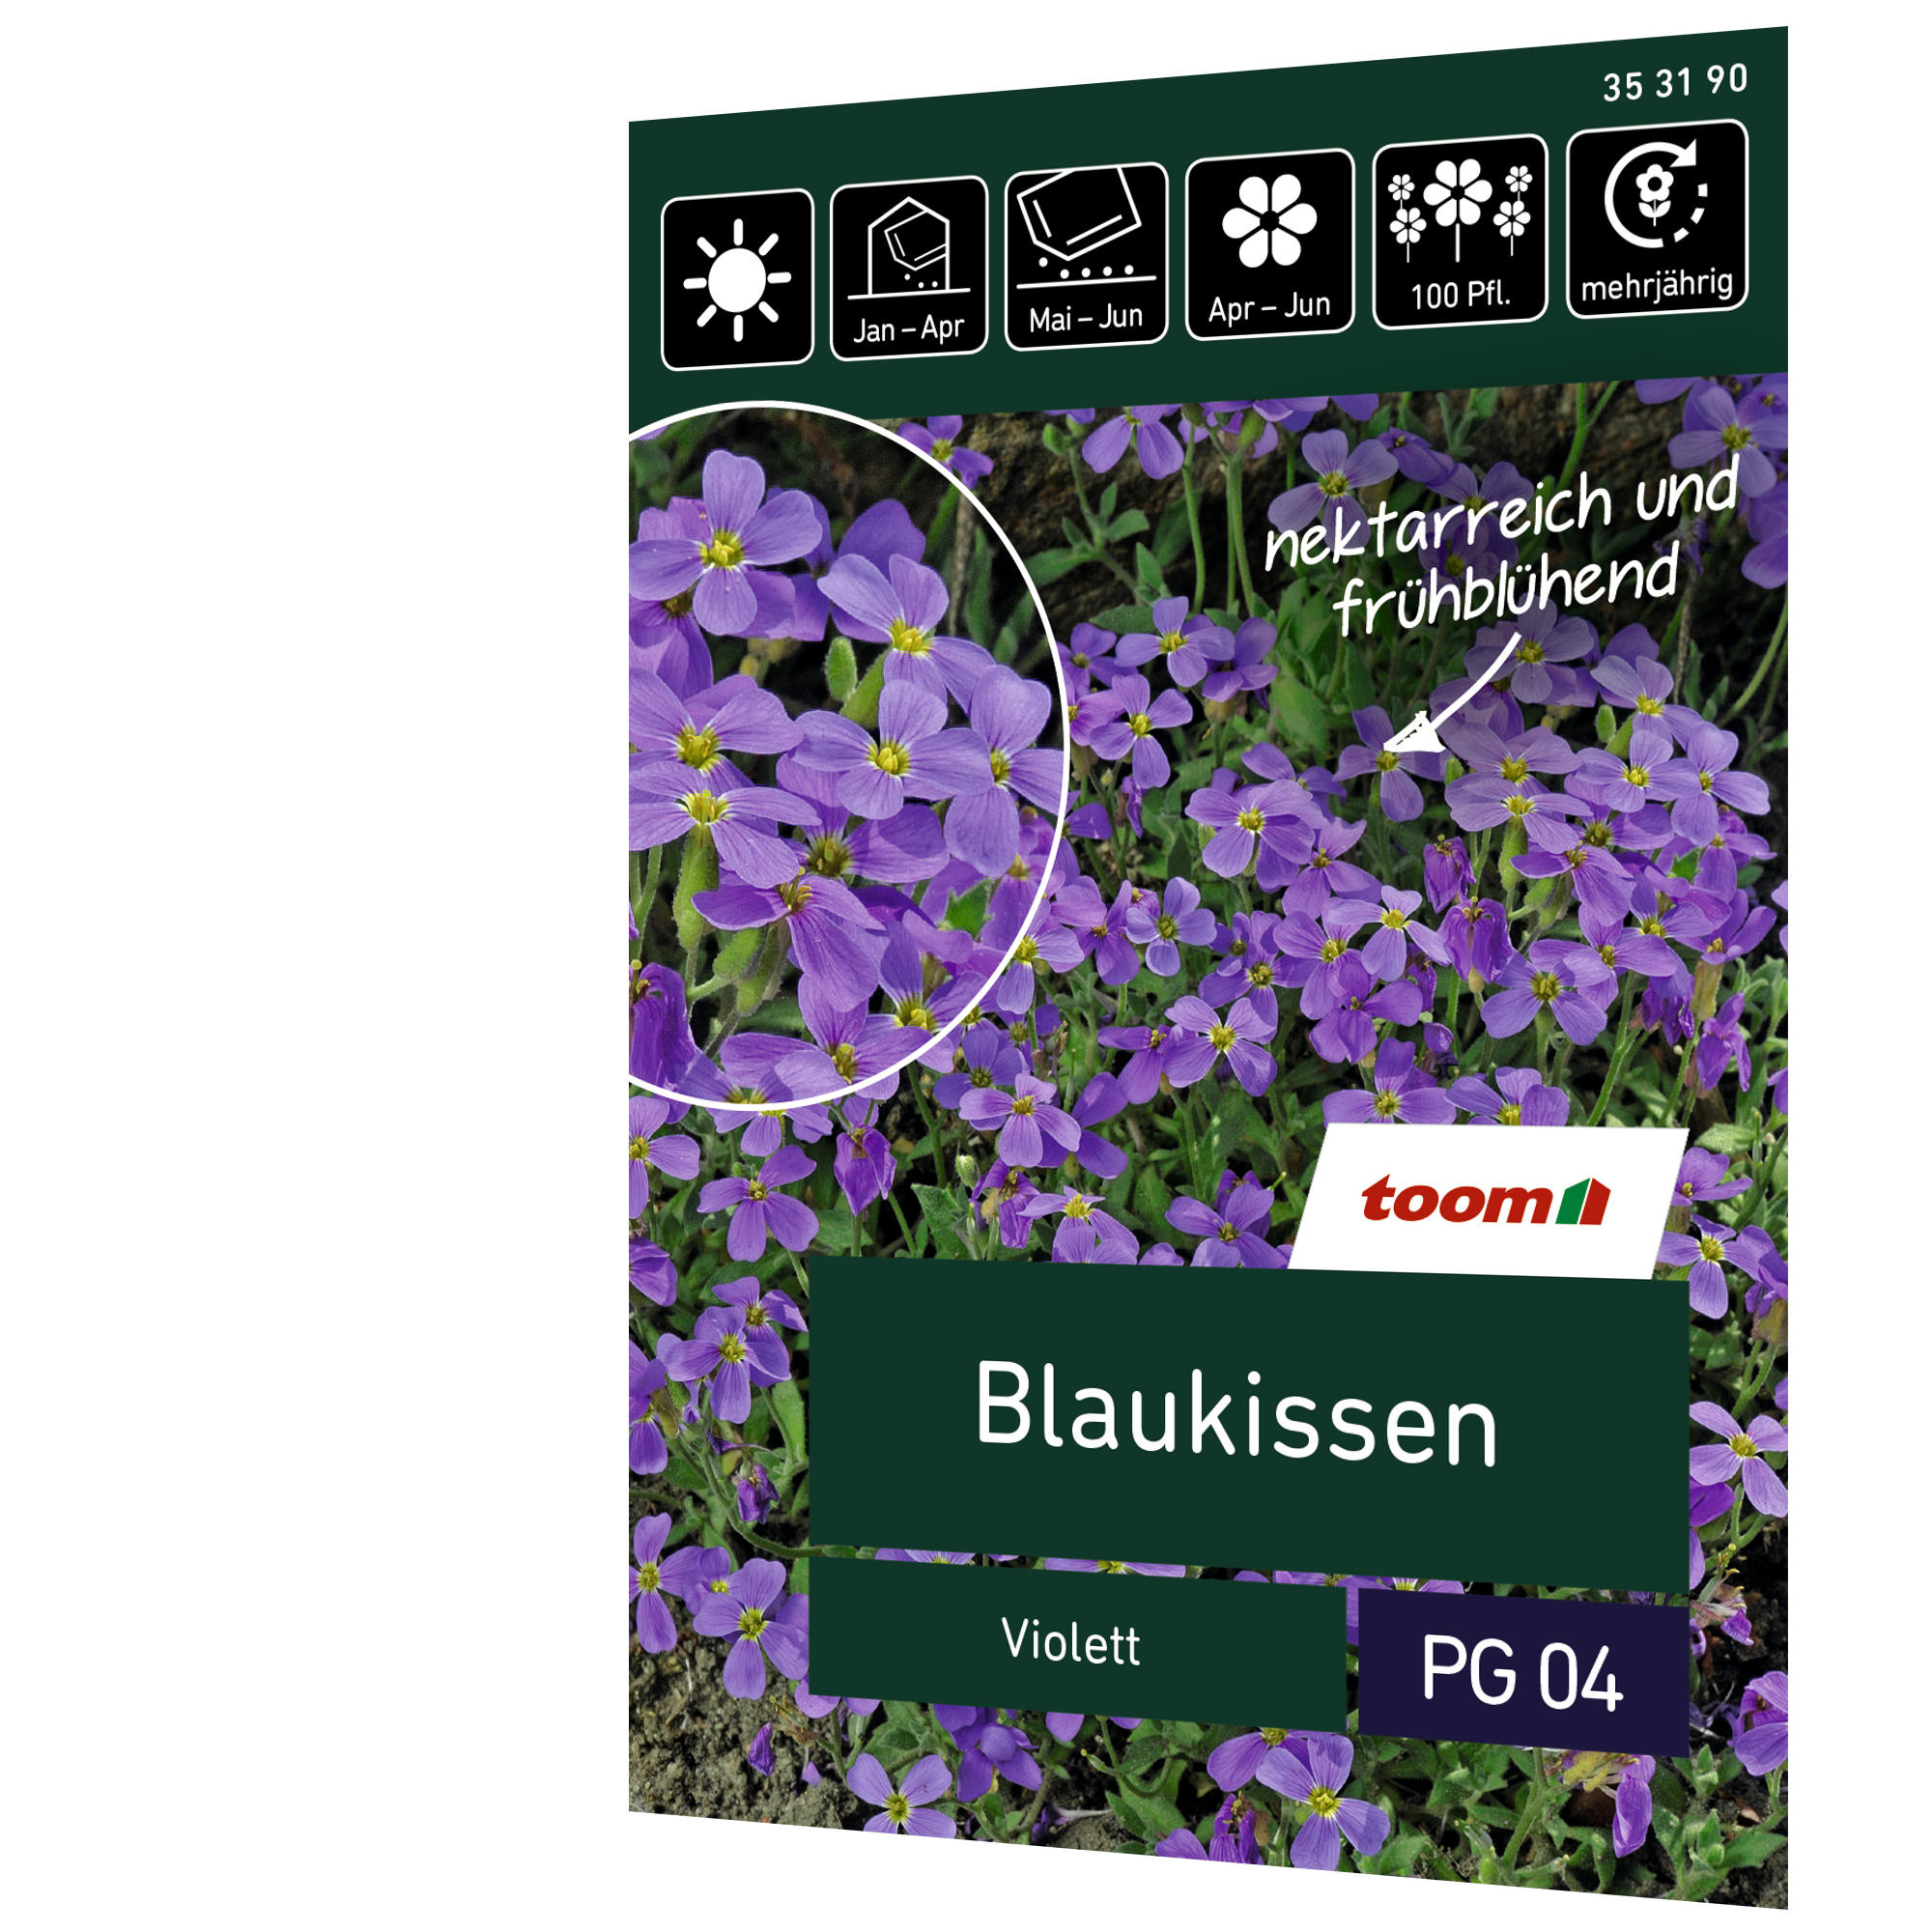 Blaukissen 'Violett' + product picture